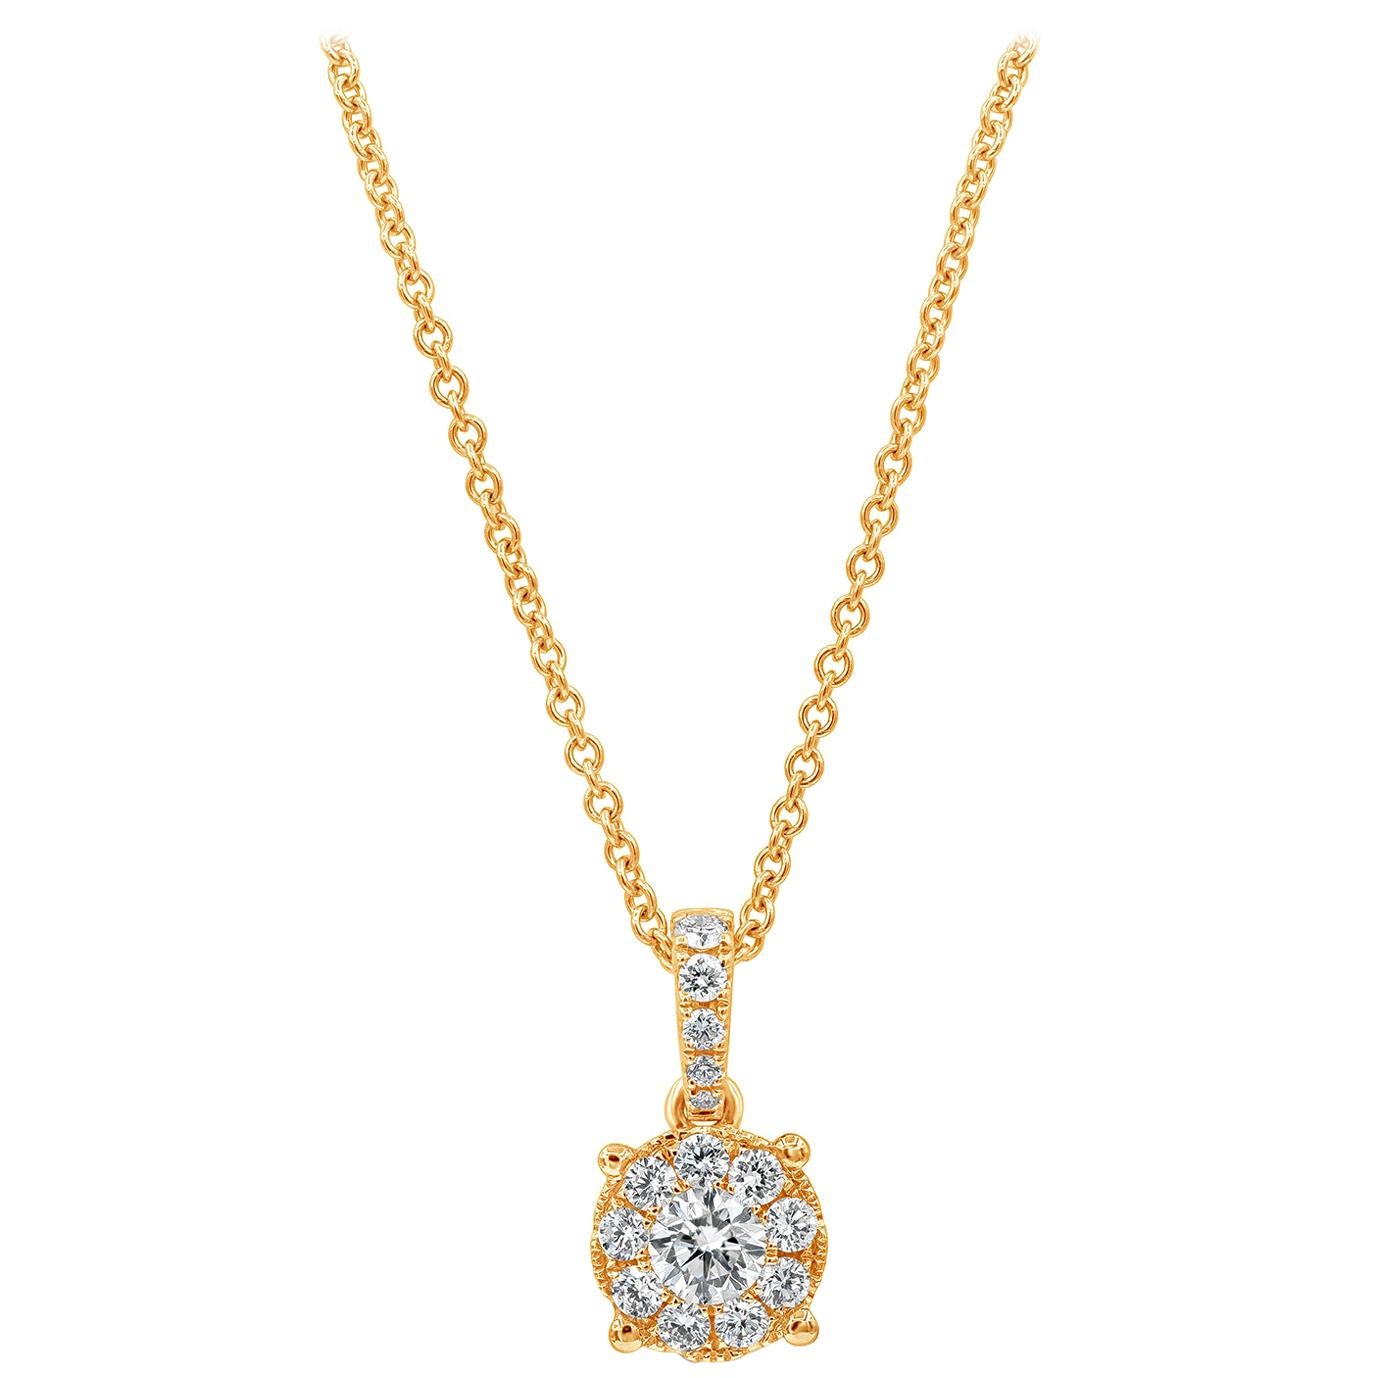 Roman Malakov, collier pendentif en grappe de diamants ronds brillants de 0,48 carat au total en vente